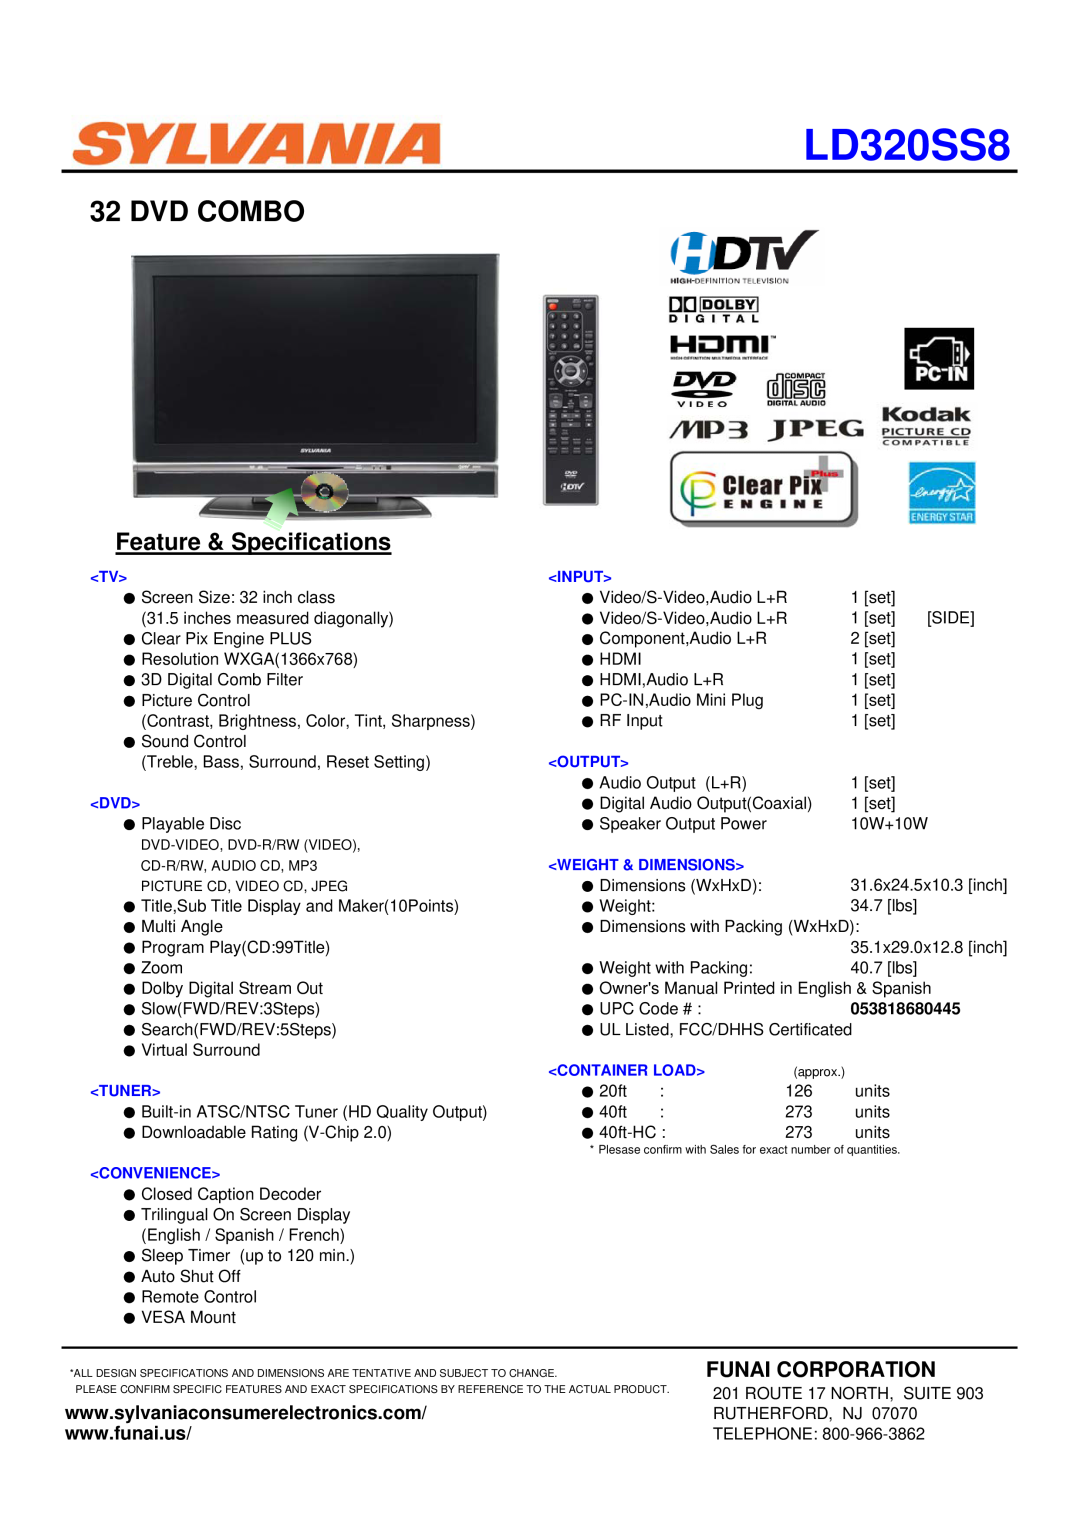 Sylvania LD320SS8 specifications Wxga Dvd Combo, Feature & Specifications, Funai Corporation, 420 cd/m2, Color Temp 